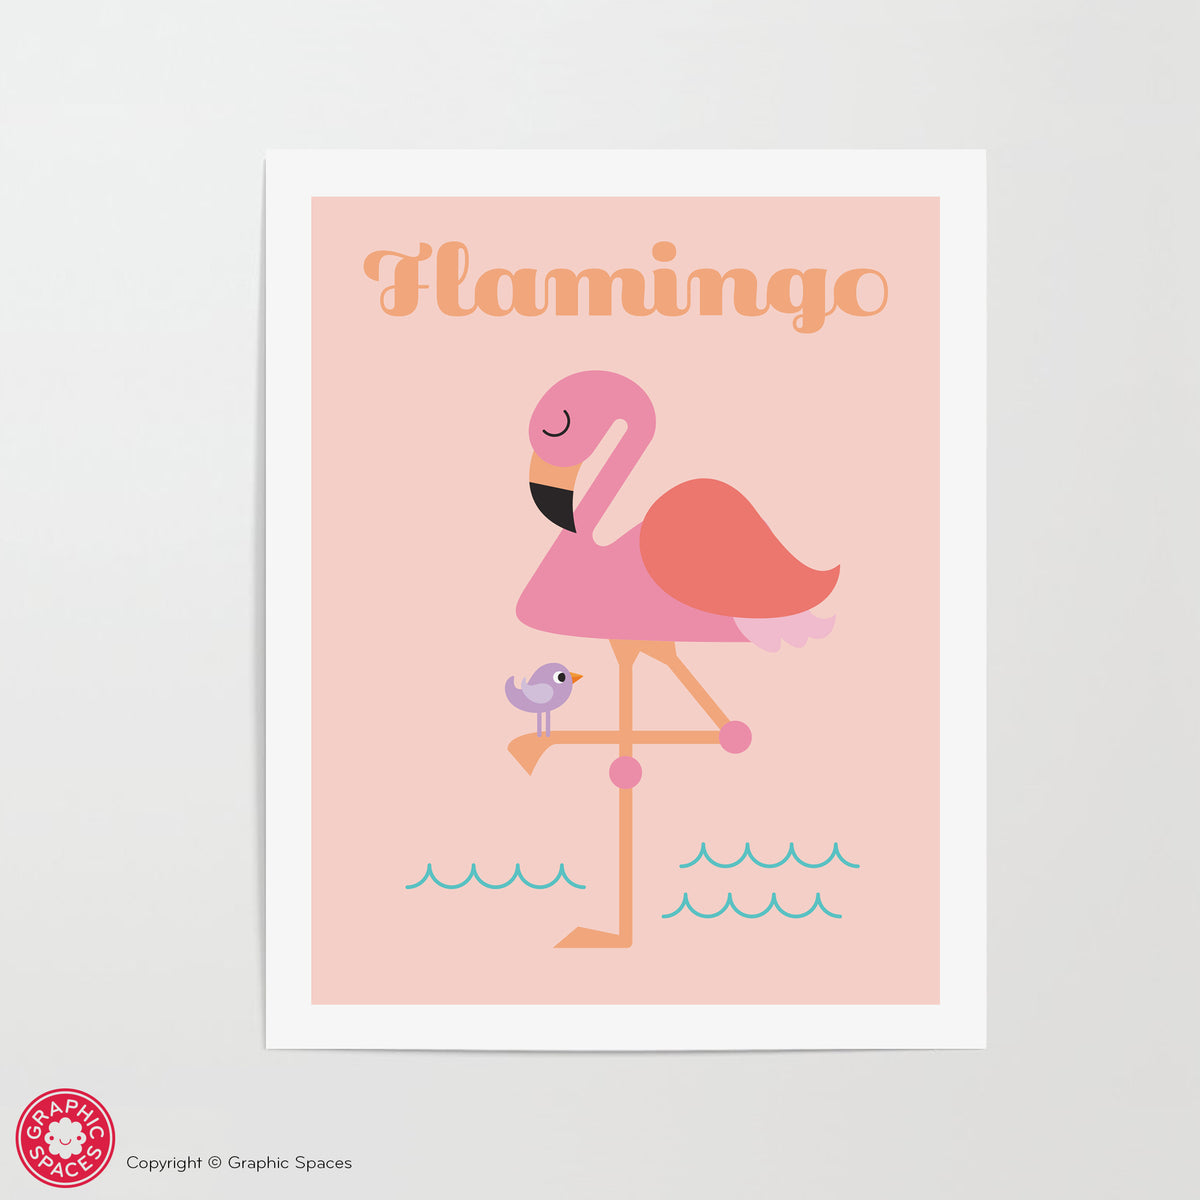 Flamingo nursery art print.